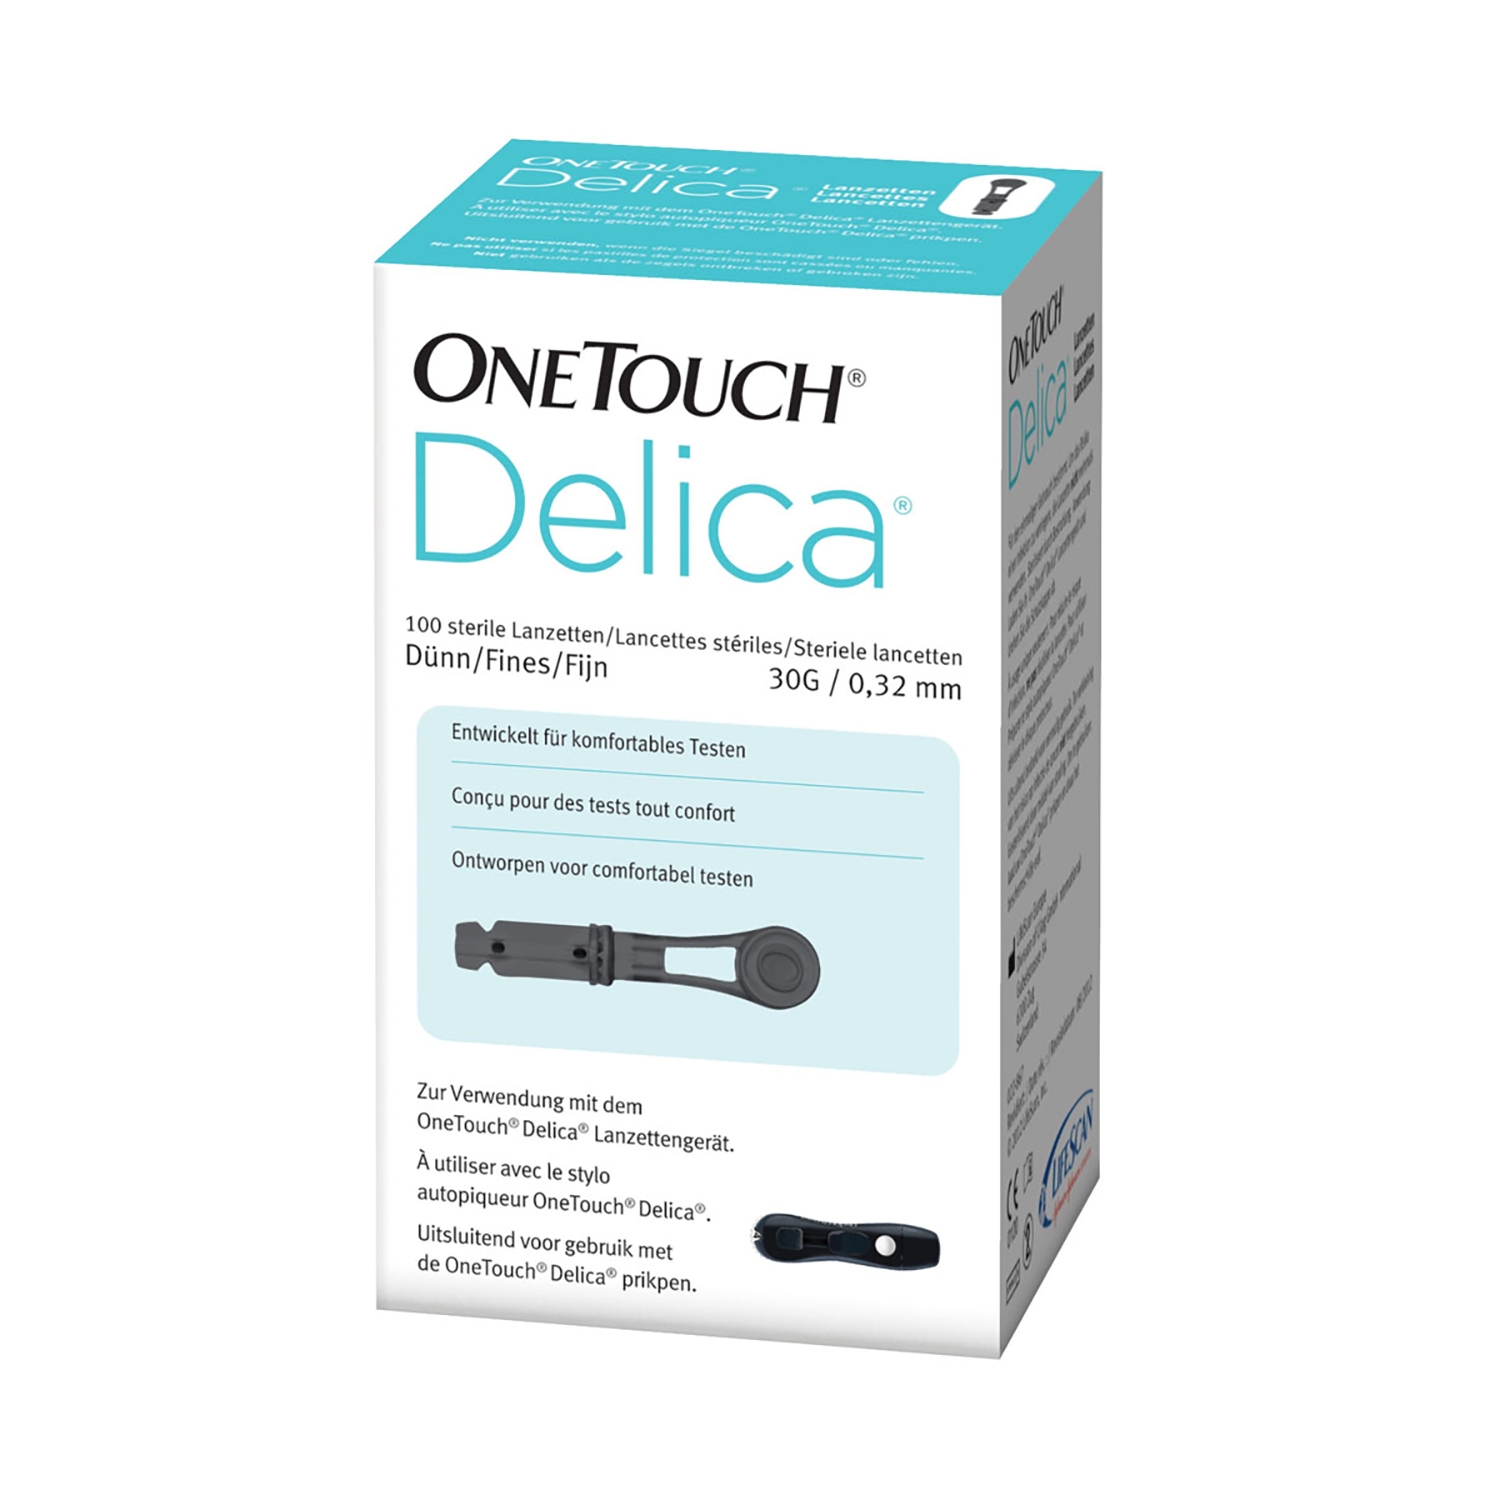 One touch delica lancetten (100 st)